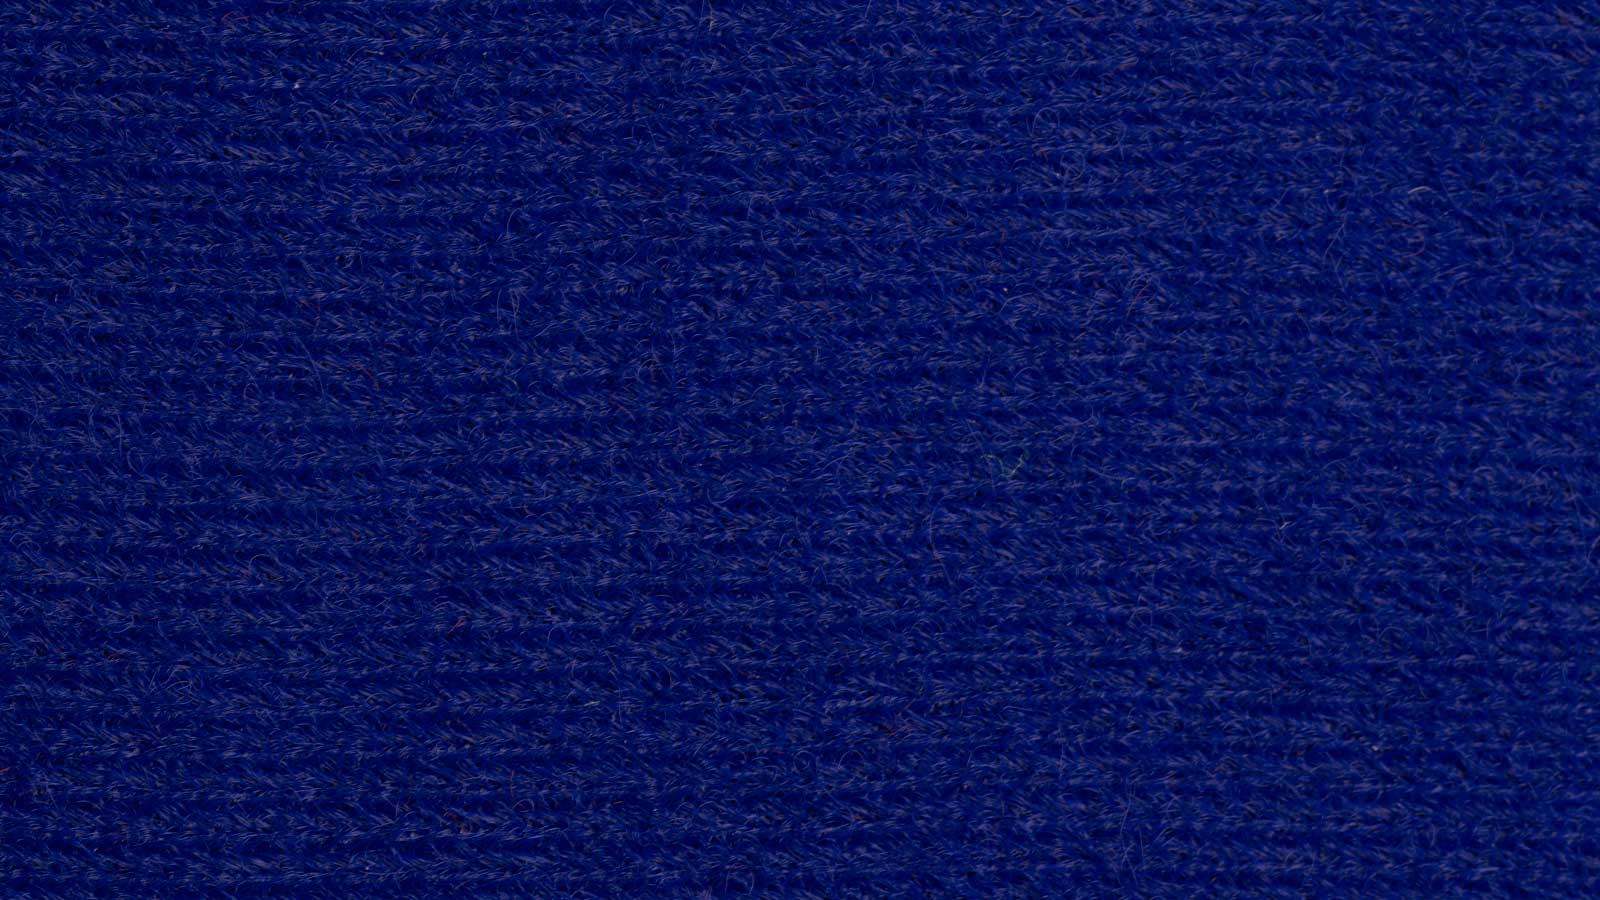 Fontex-empresa-tejidos-barcelona-producto-velours-160-azul